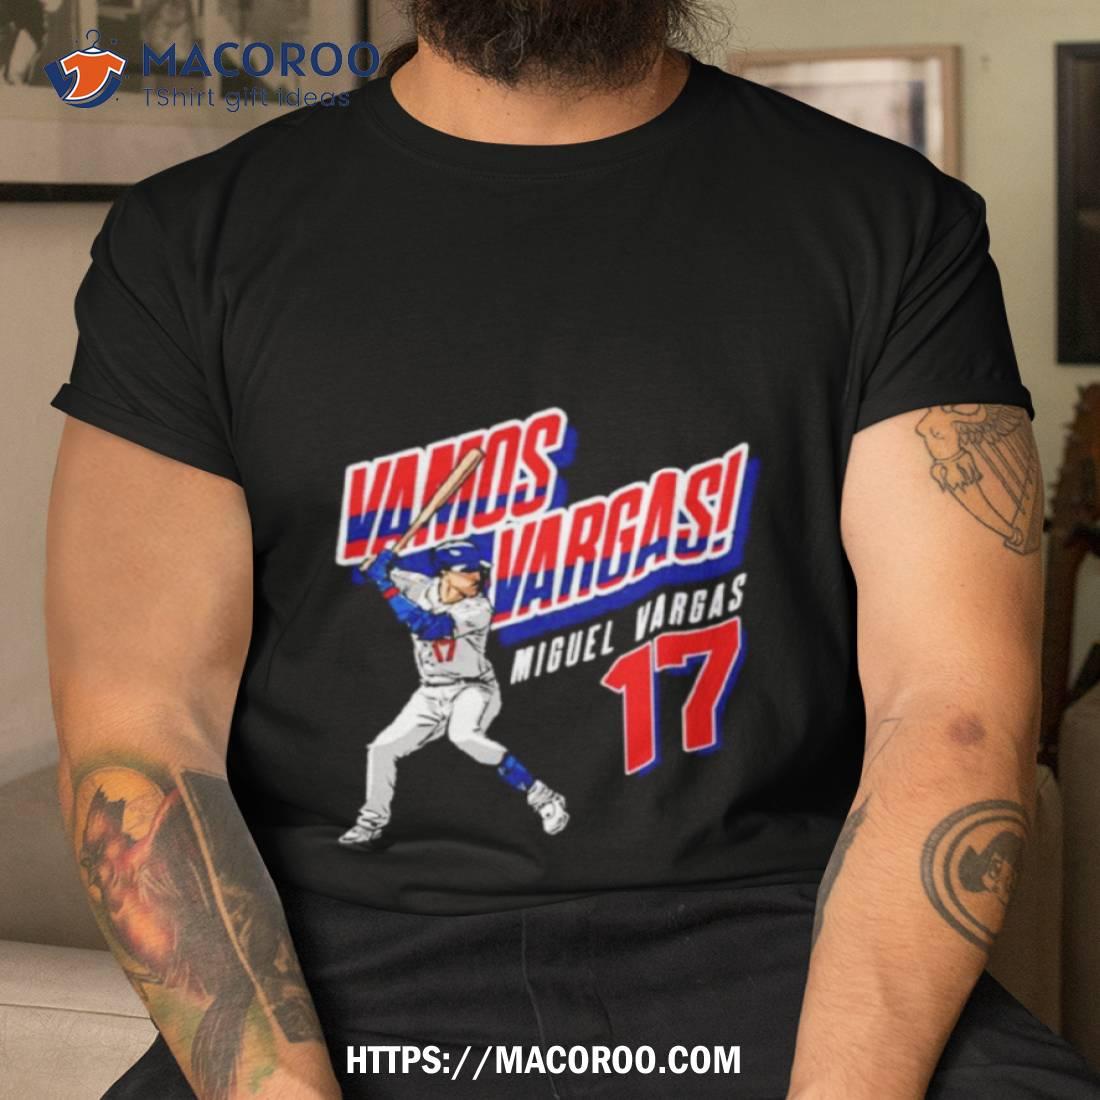 Vargas Vamos Miguel Vargas #17 Los Angeles Dodgers T-shirt,Sweater